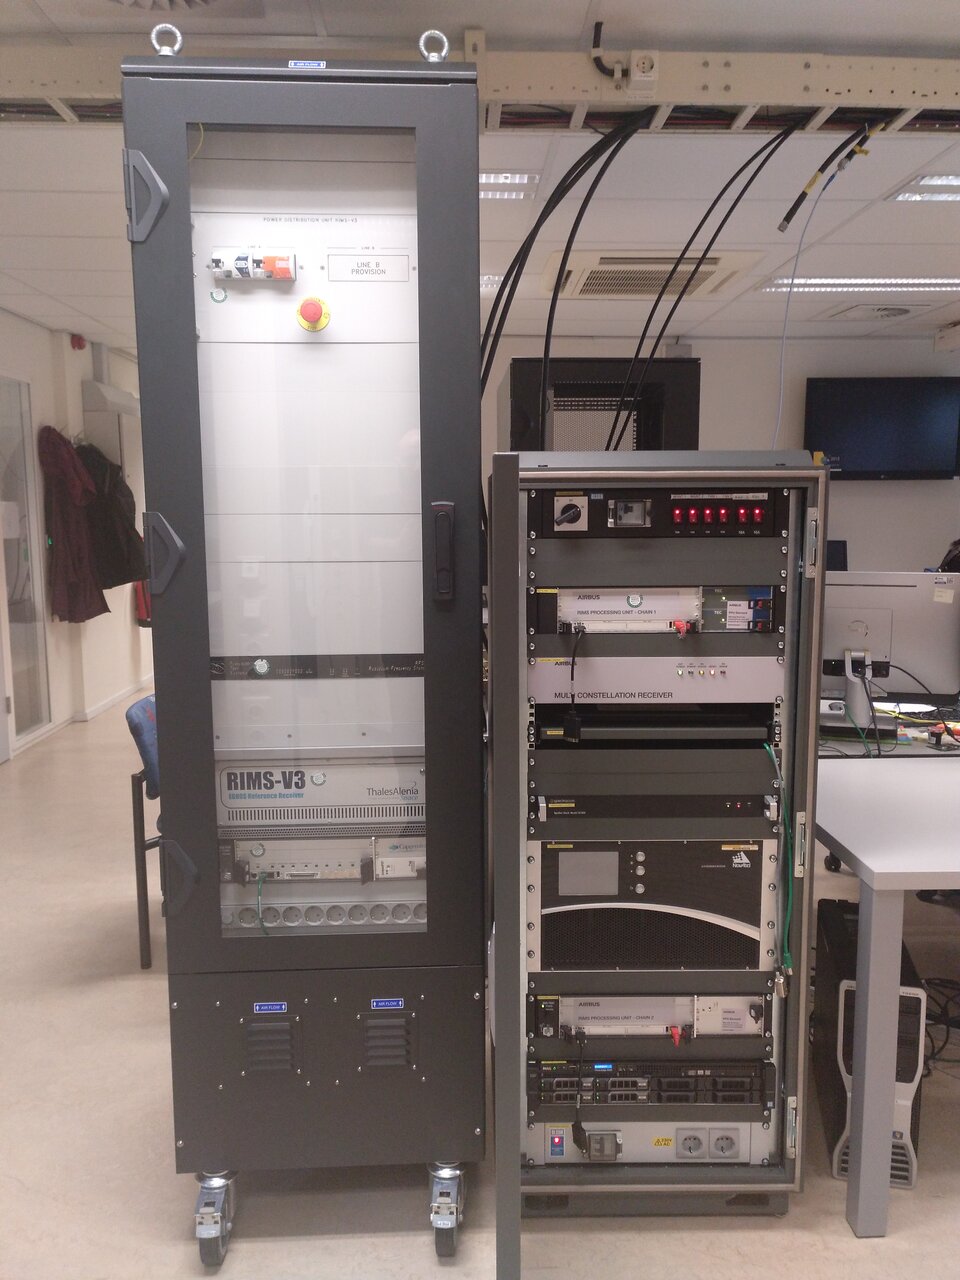 EGNOS v3 prototype reference stations 